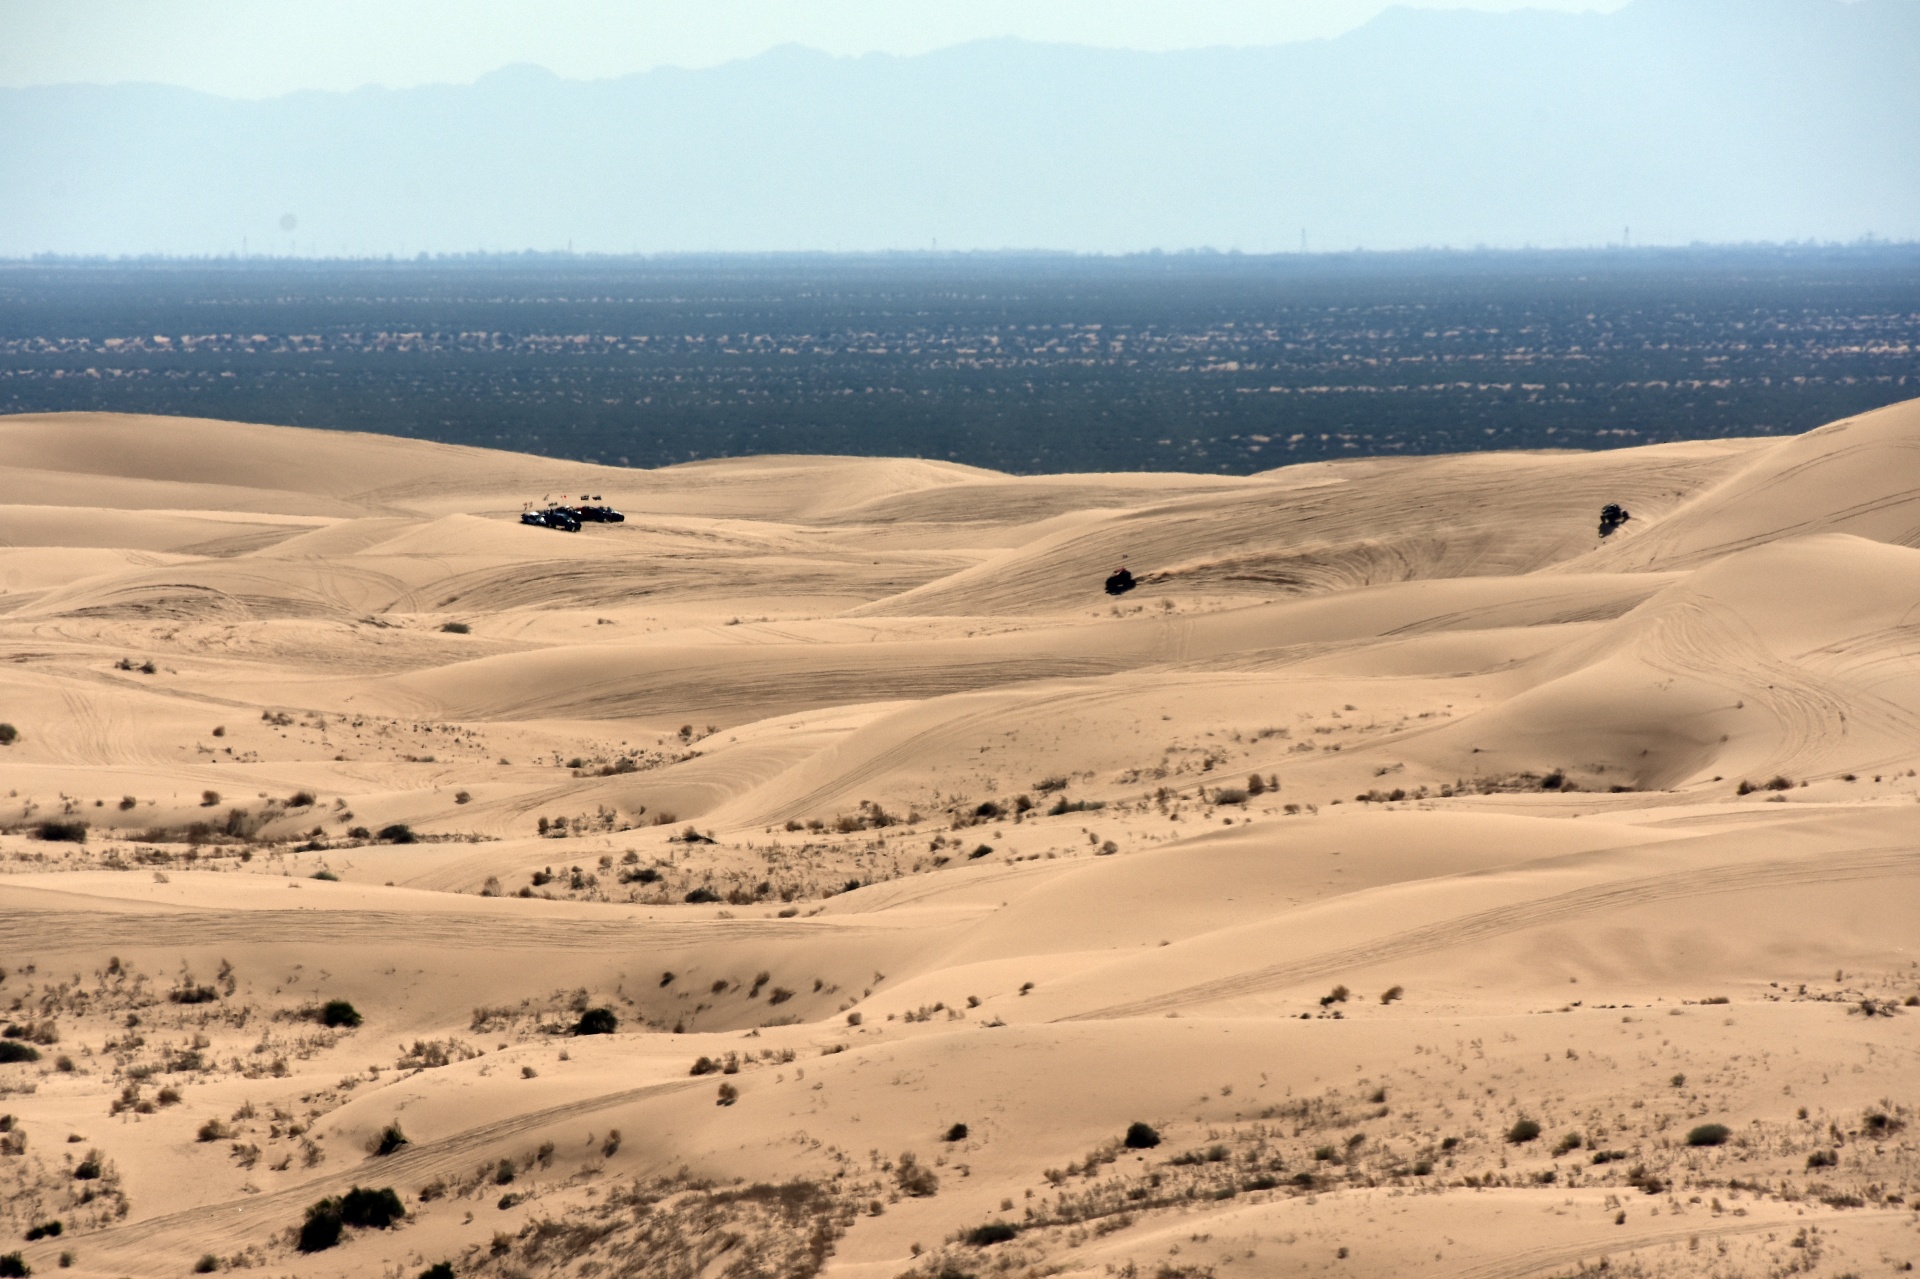 Dune Buggies On The Dunes